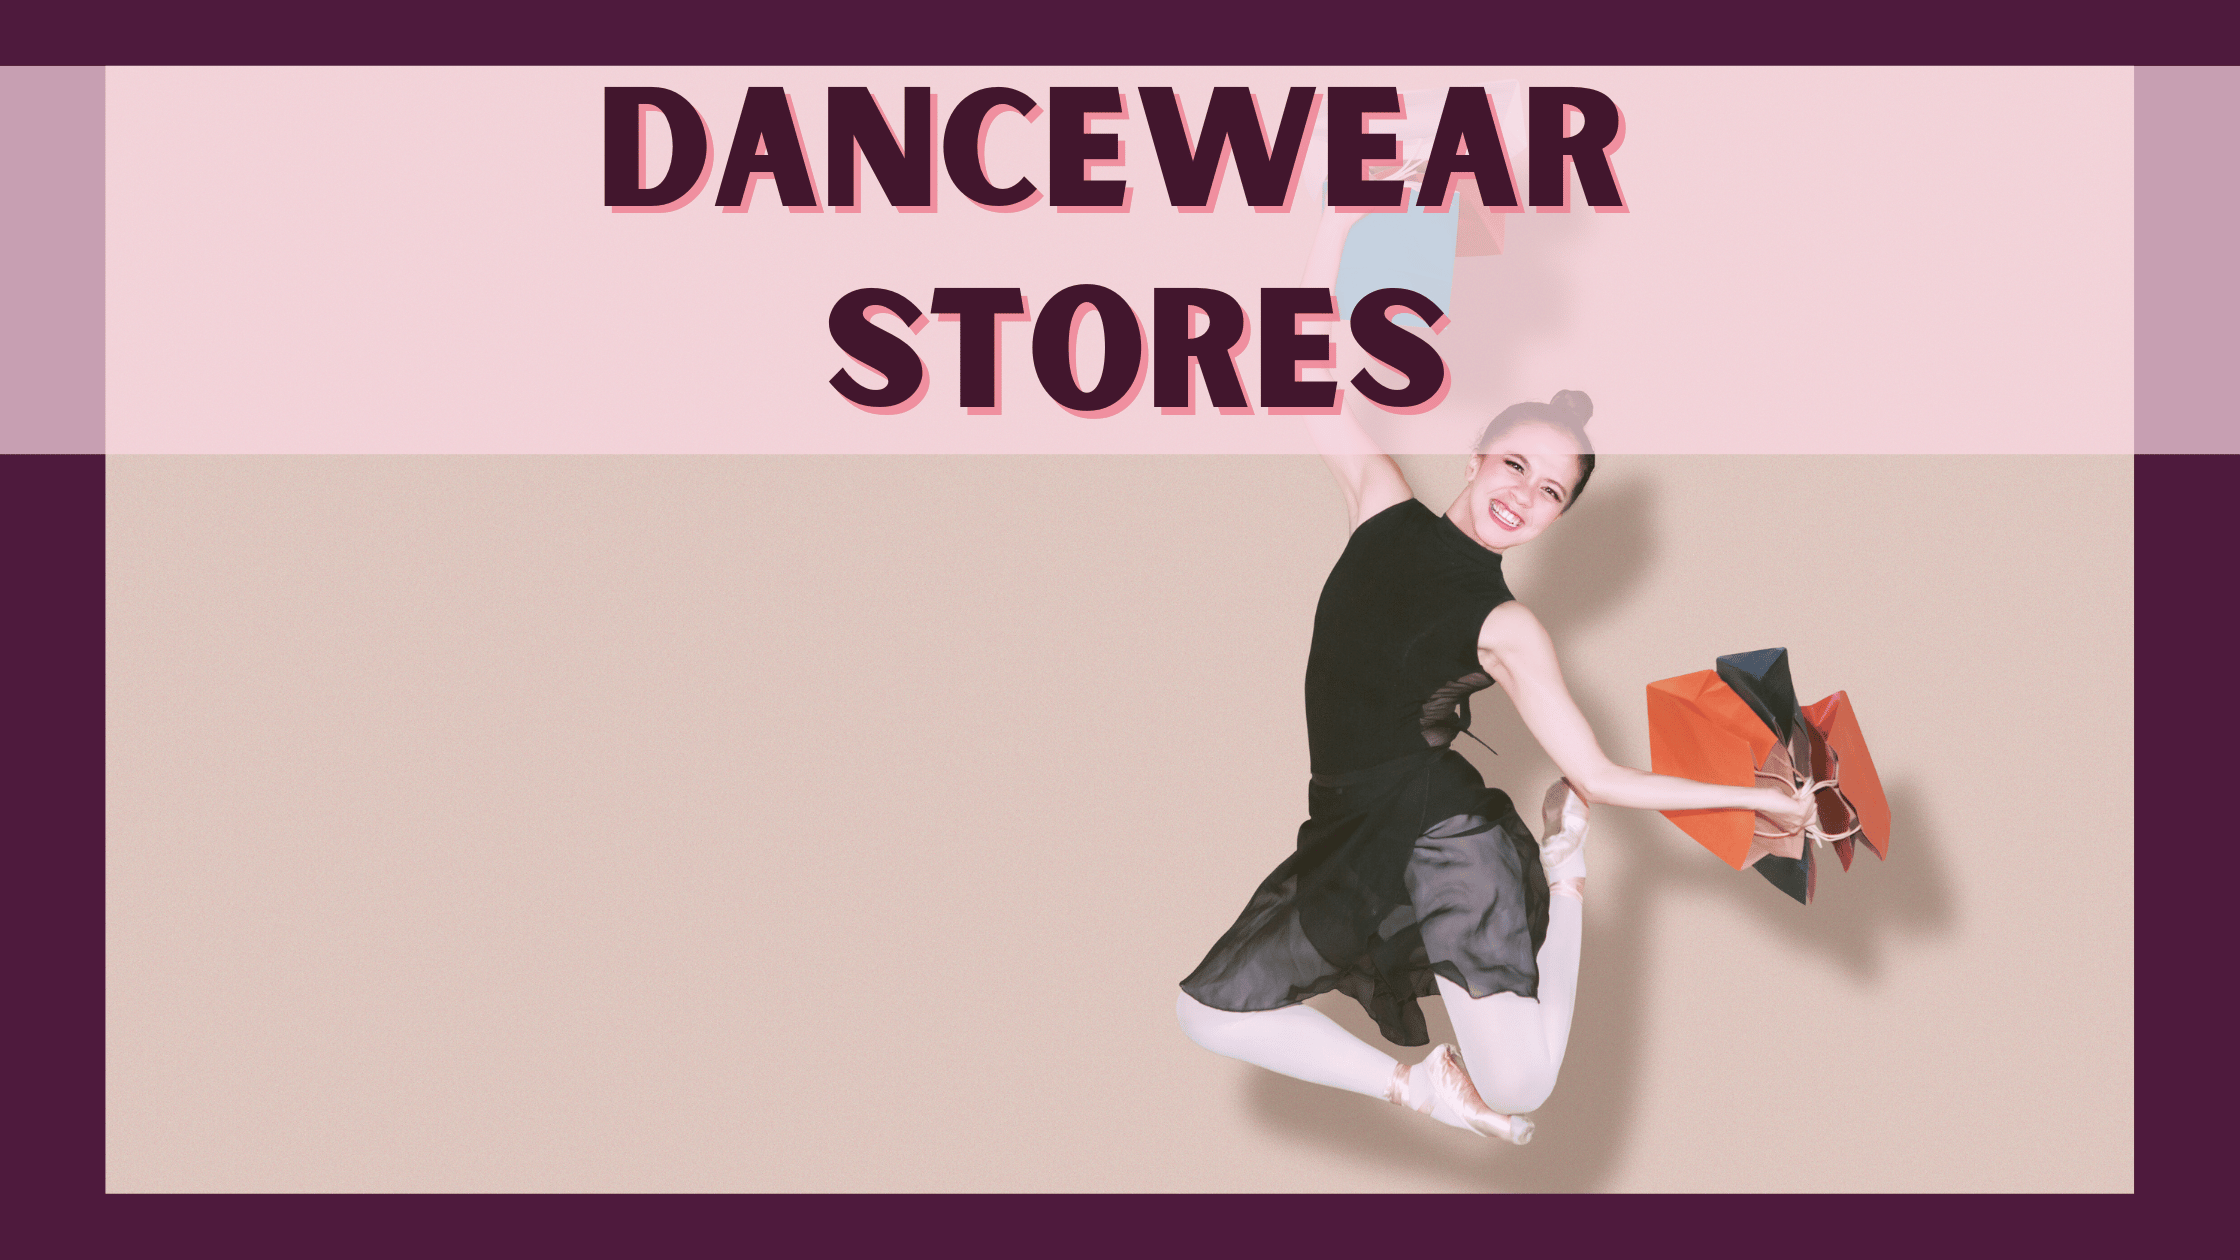 Dancewear Stores